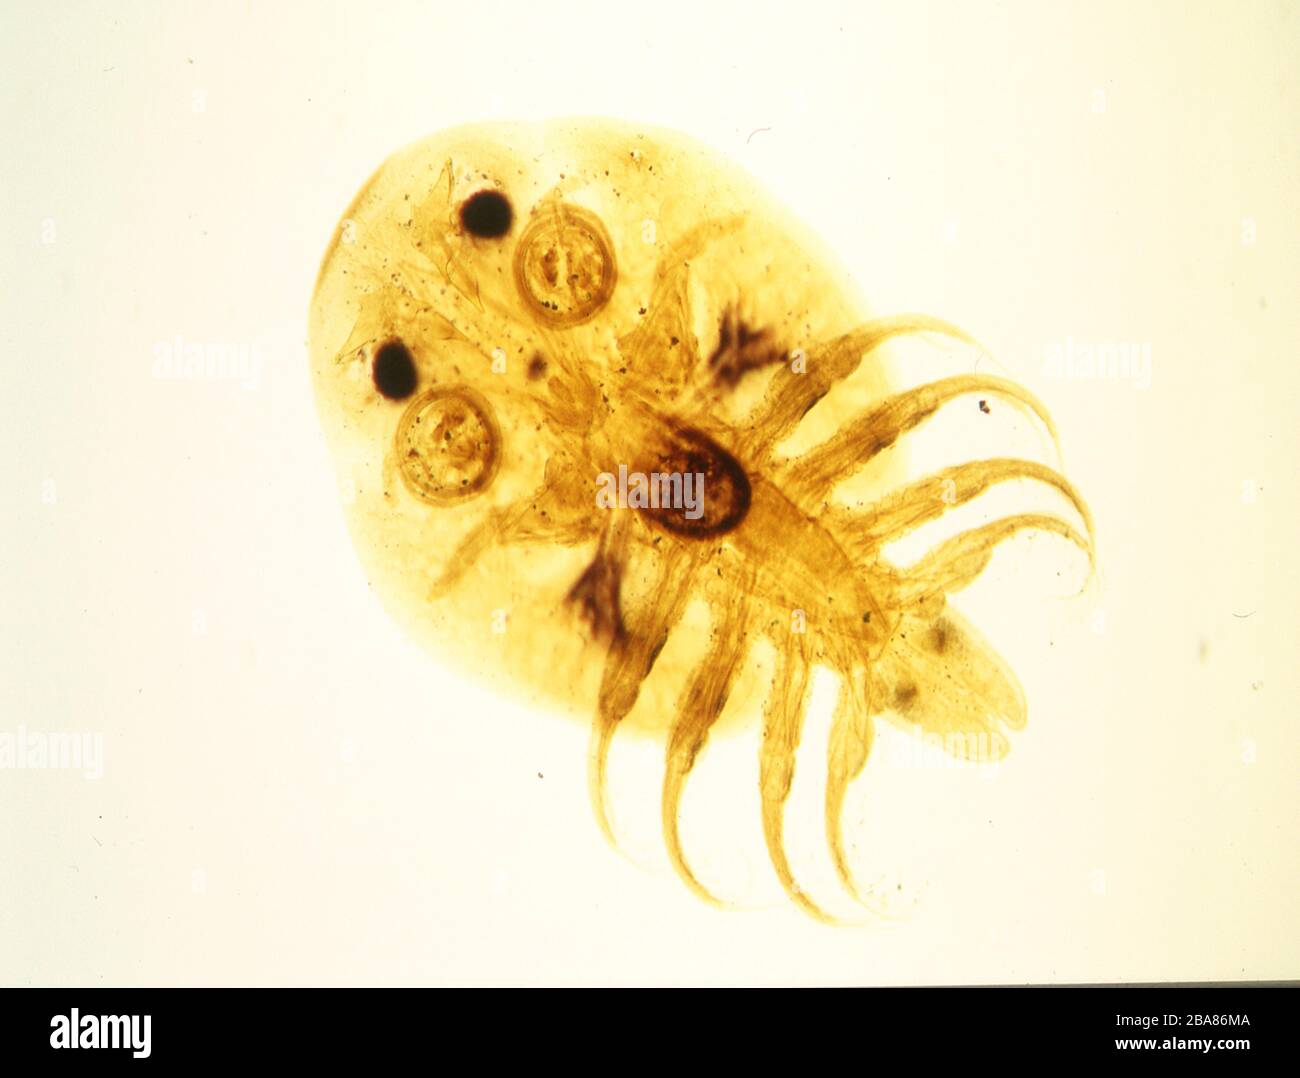 parasitic carp louse under the microscope 100x Stock Photo